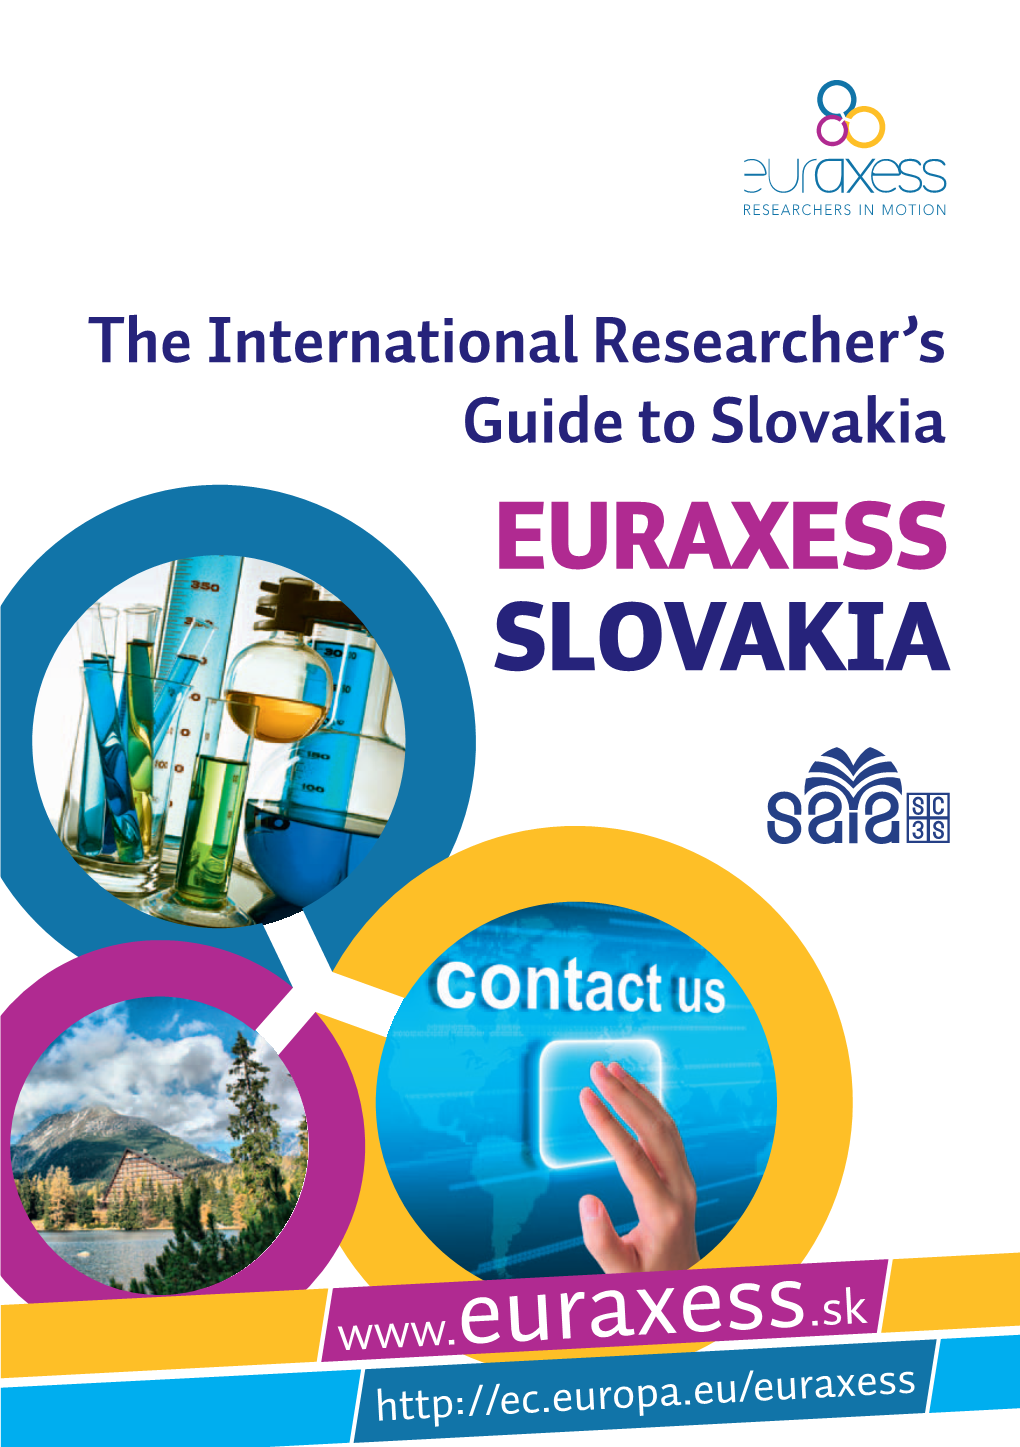 Euraxess Slovakia